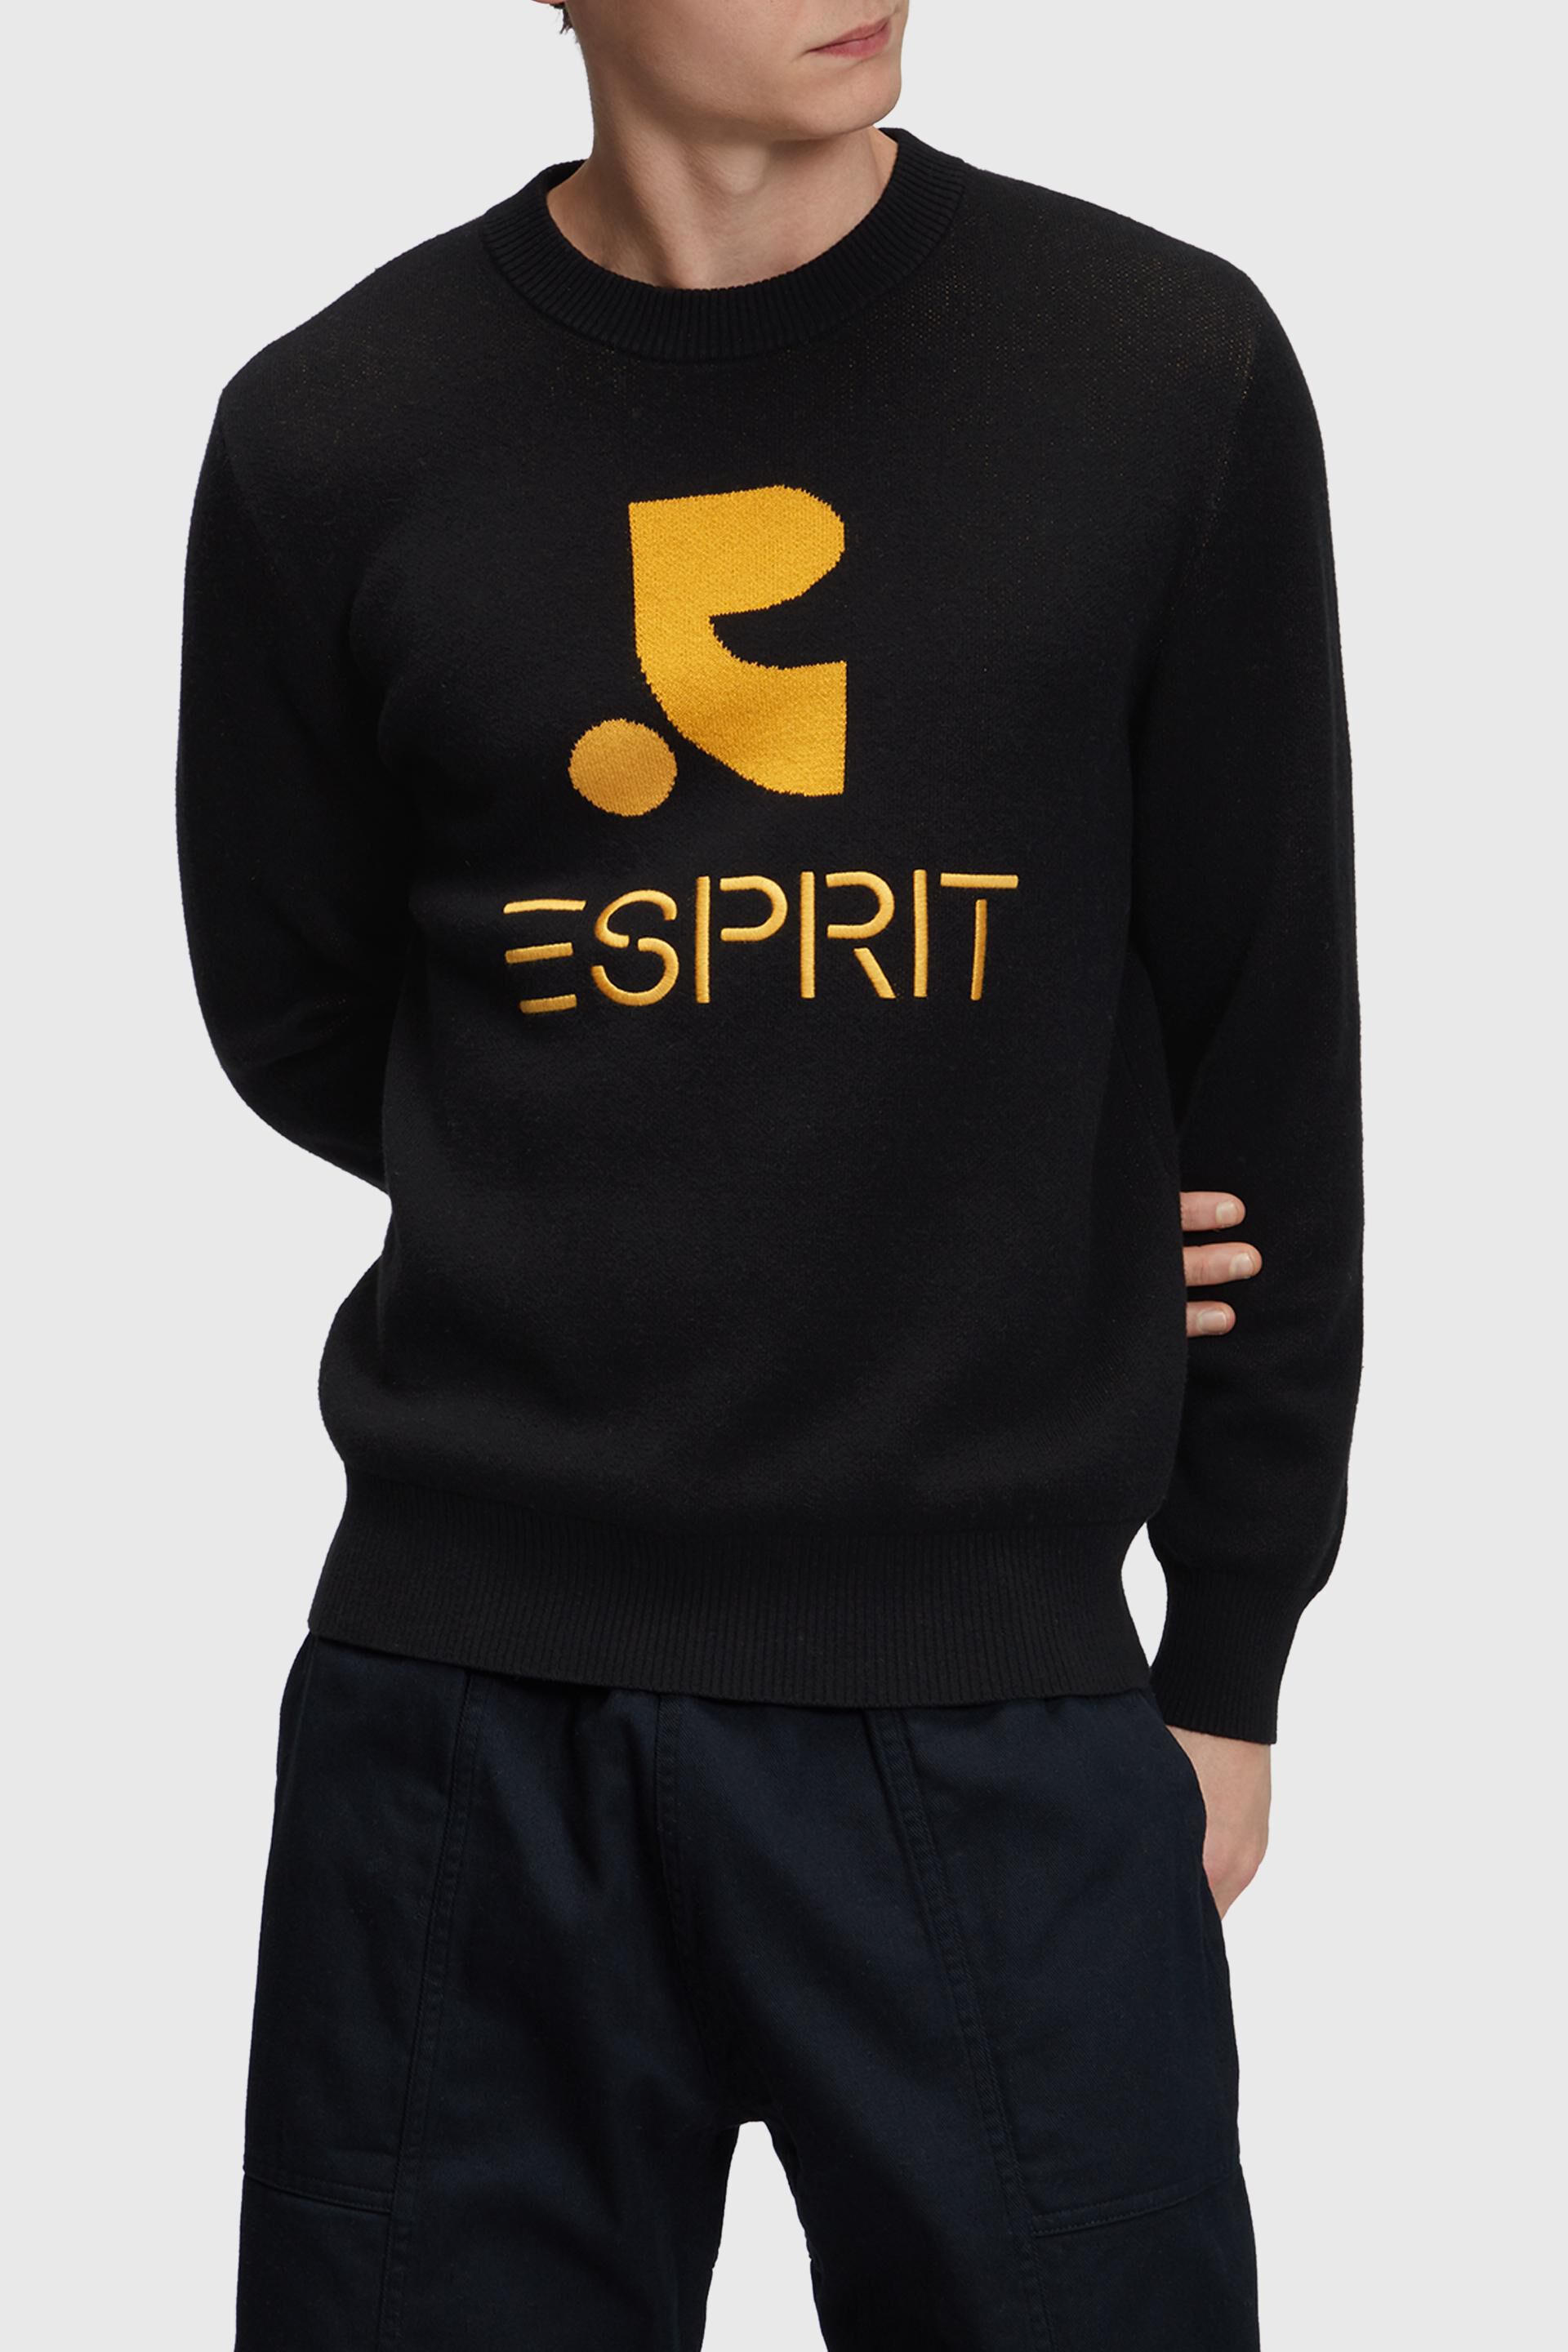 Esprit cashmere Crewneck with jumper